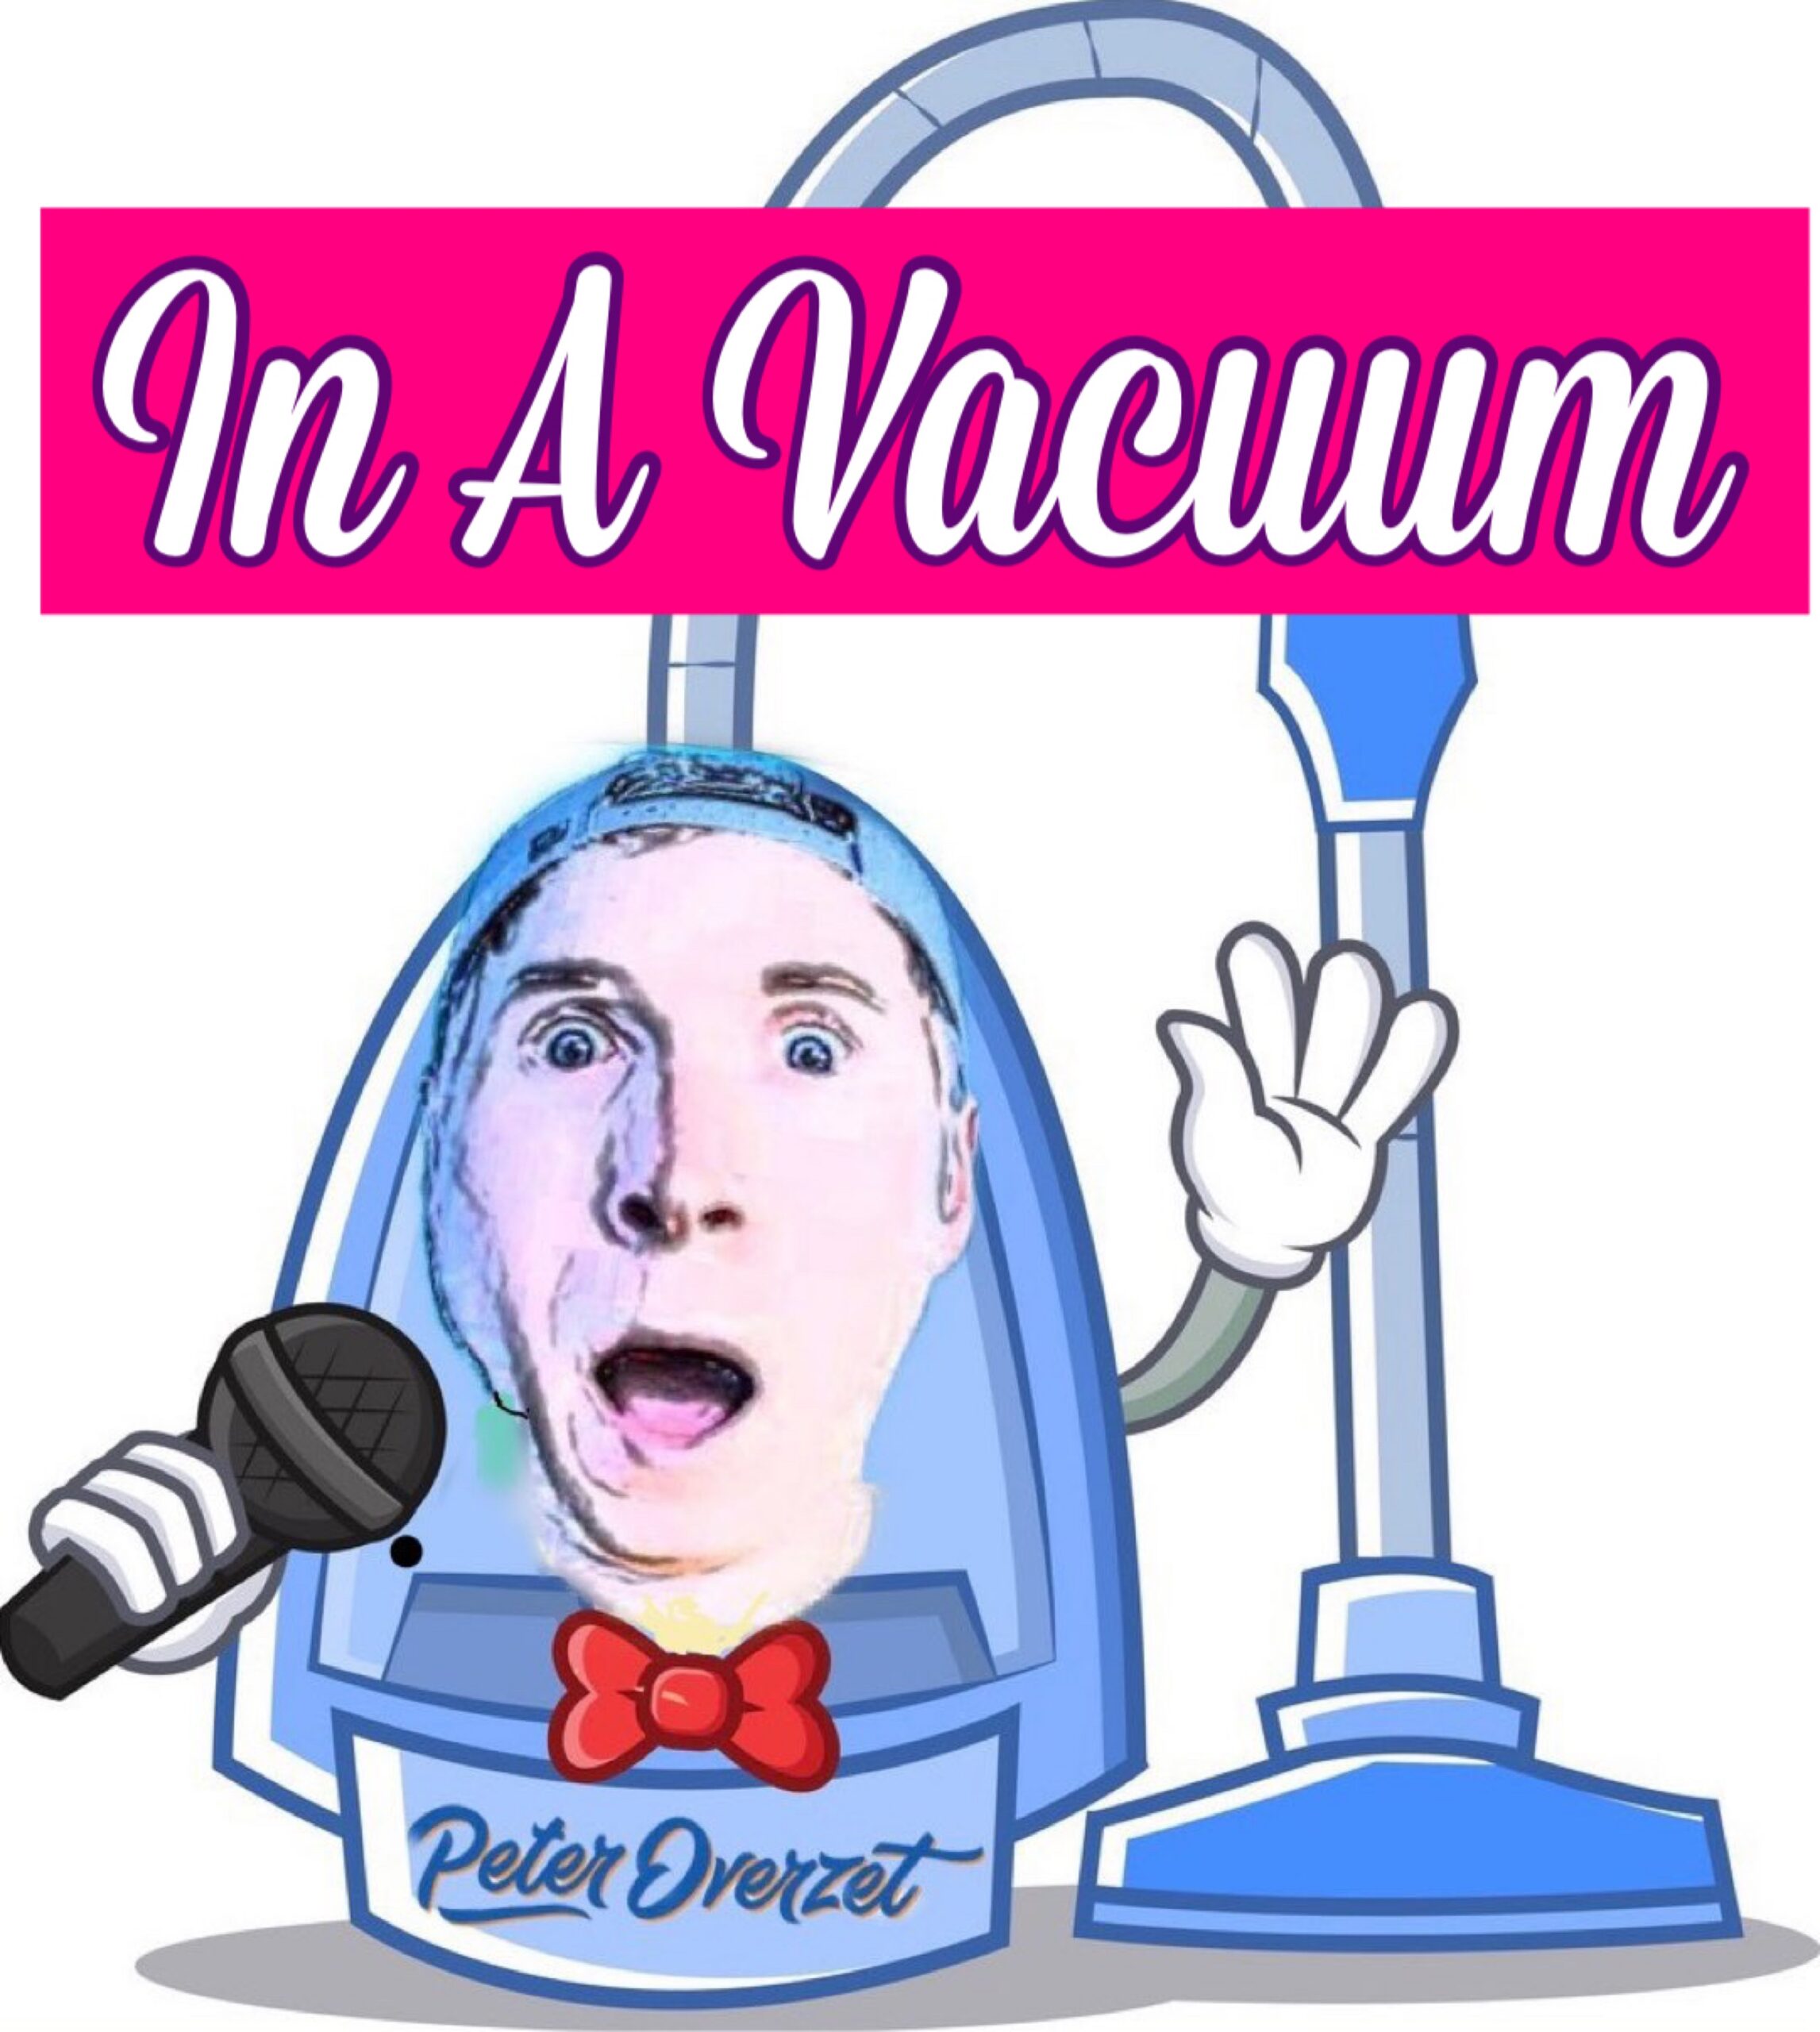 In a Vacuum